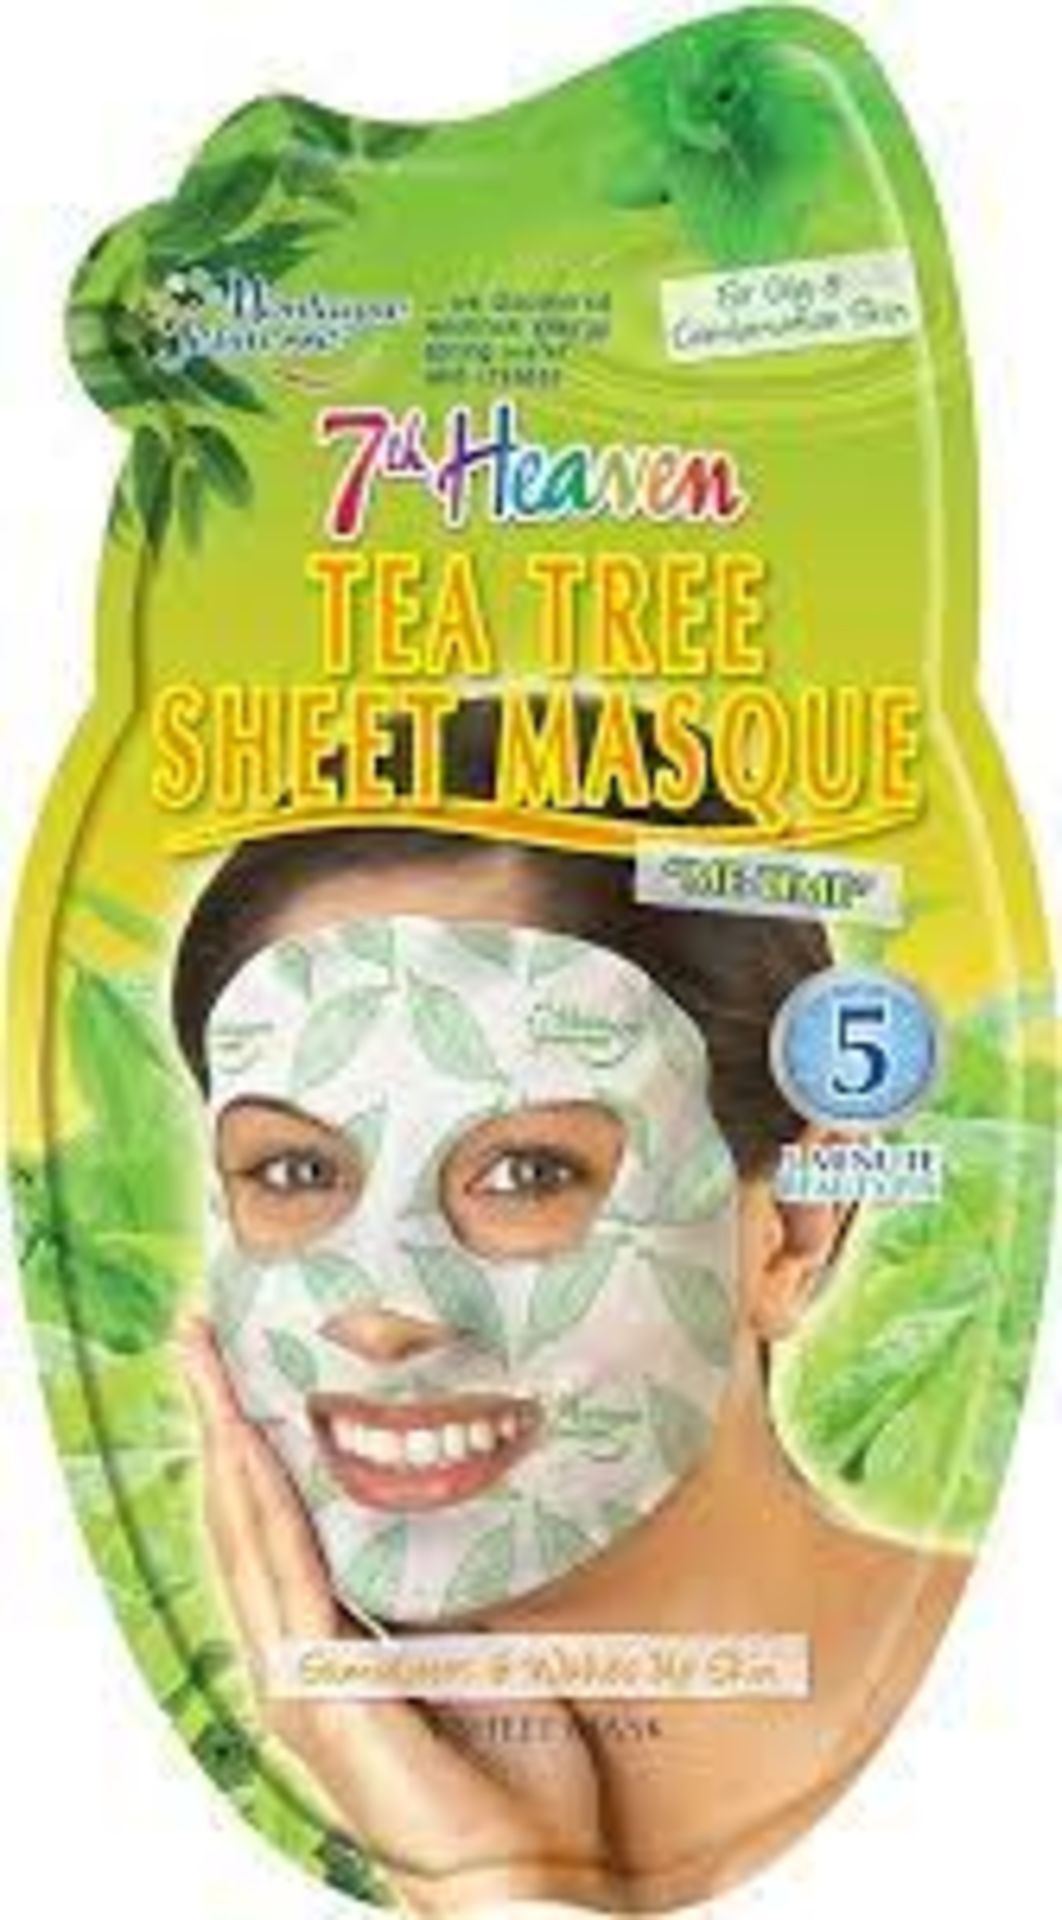 440 x BRAND NEW 7th Heaven Tea Tree Sheet Masque with Pressed Tea Tree, - PW